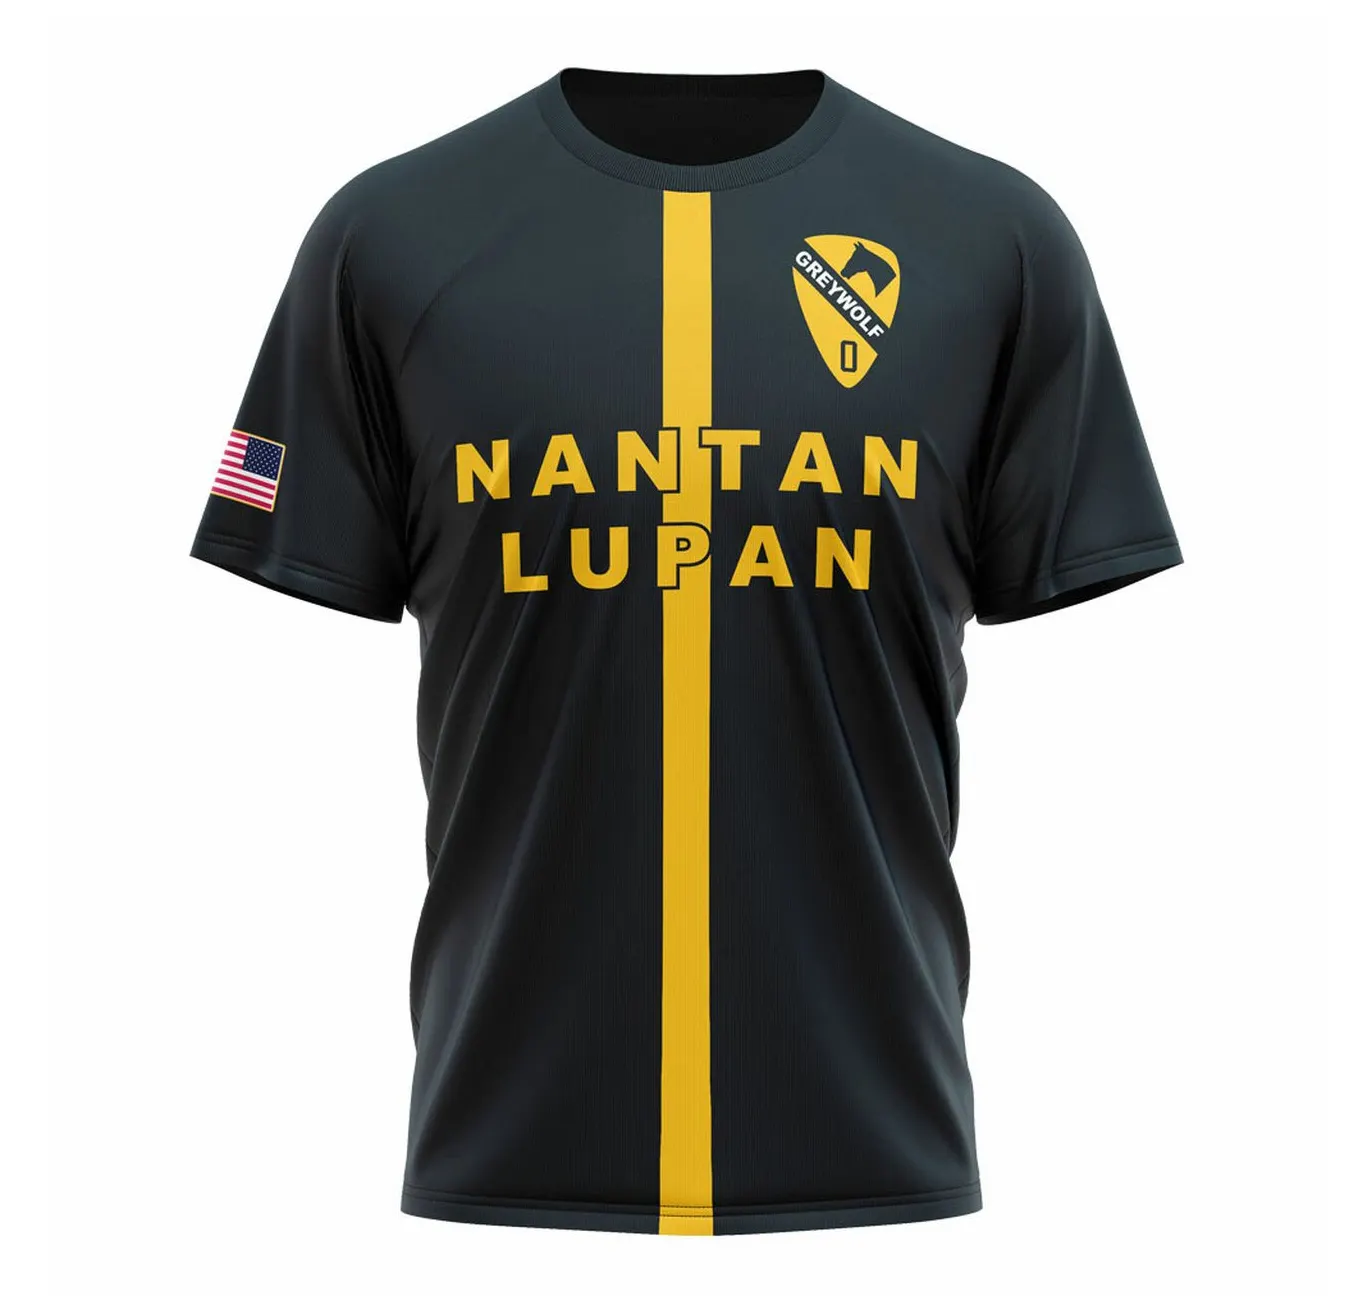 Unisex Team Sublimation Sports Soccer Wear T Shirts Uniform Football Jersey High Quality Distinctive Soccer Wear Football